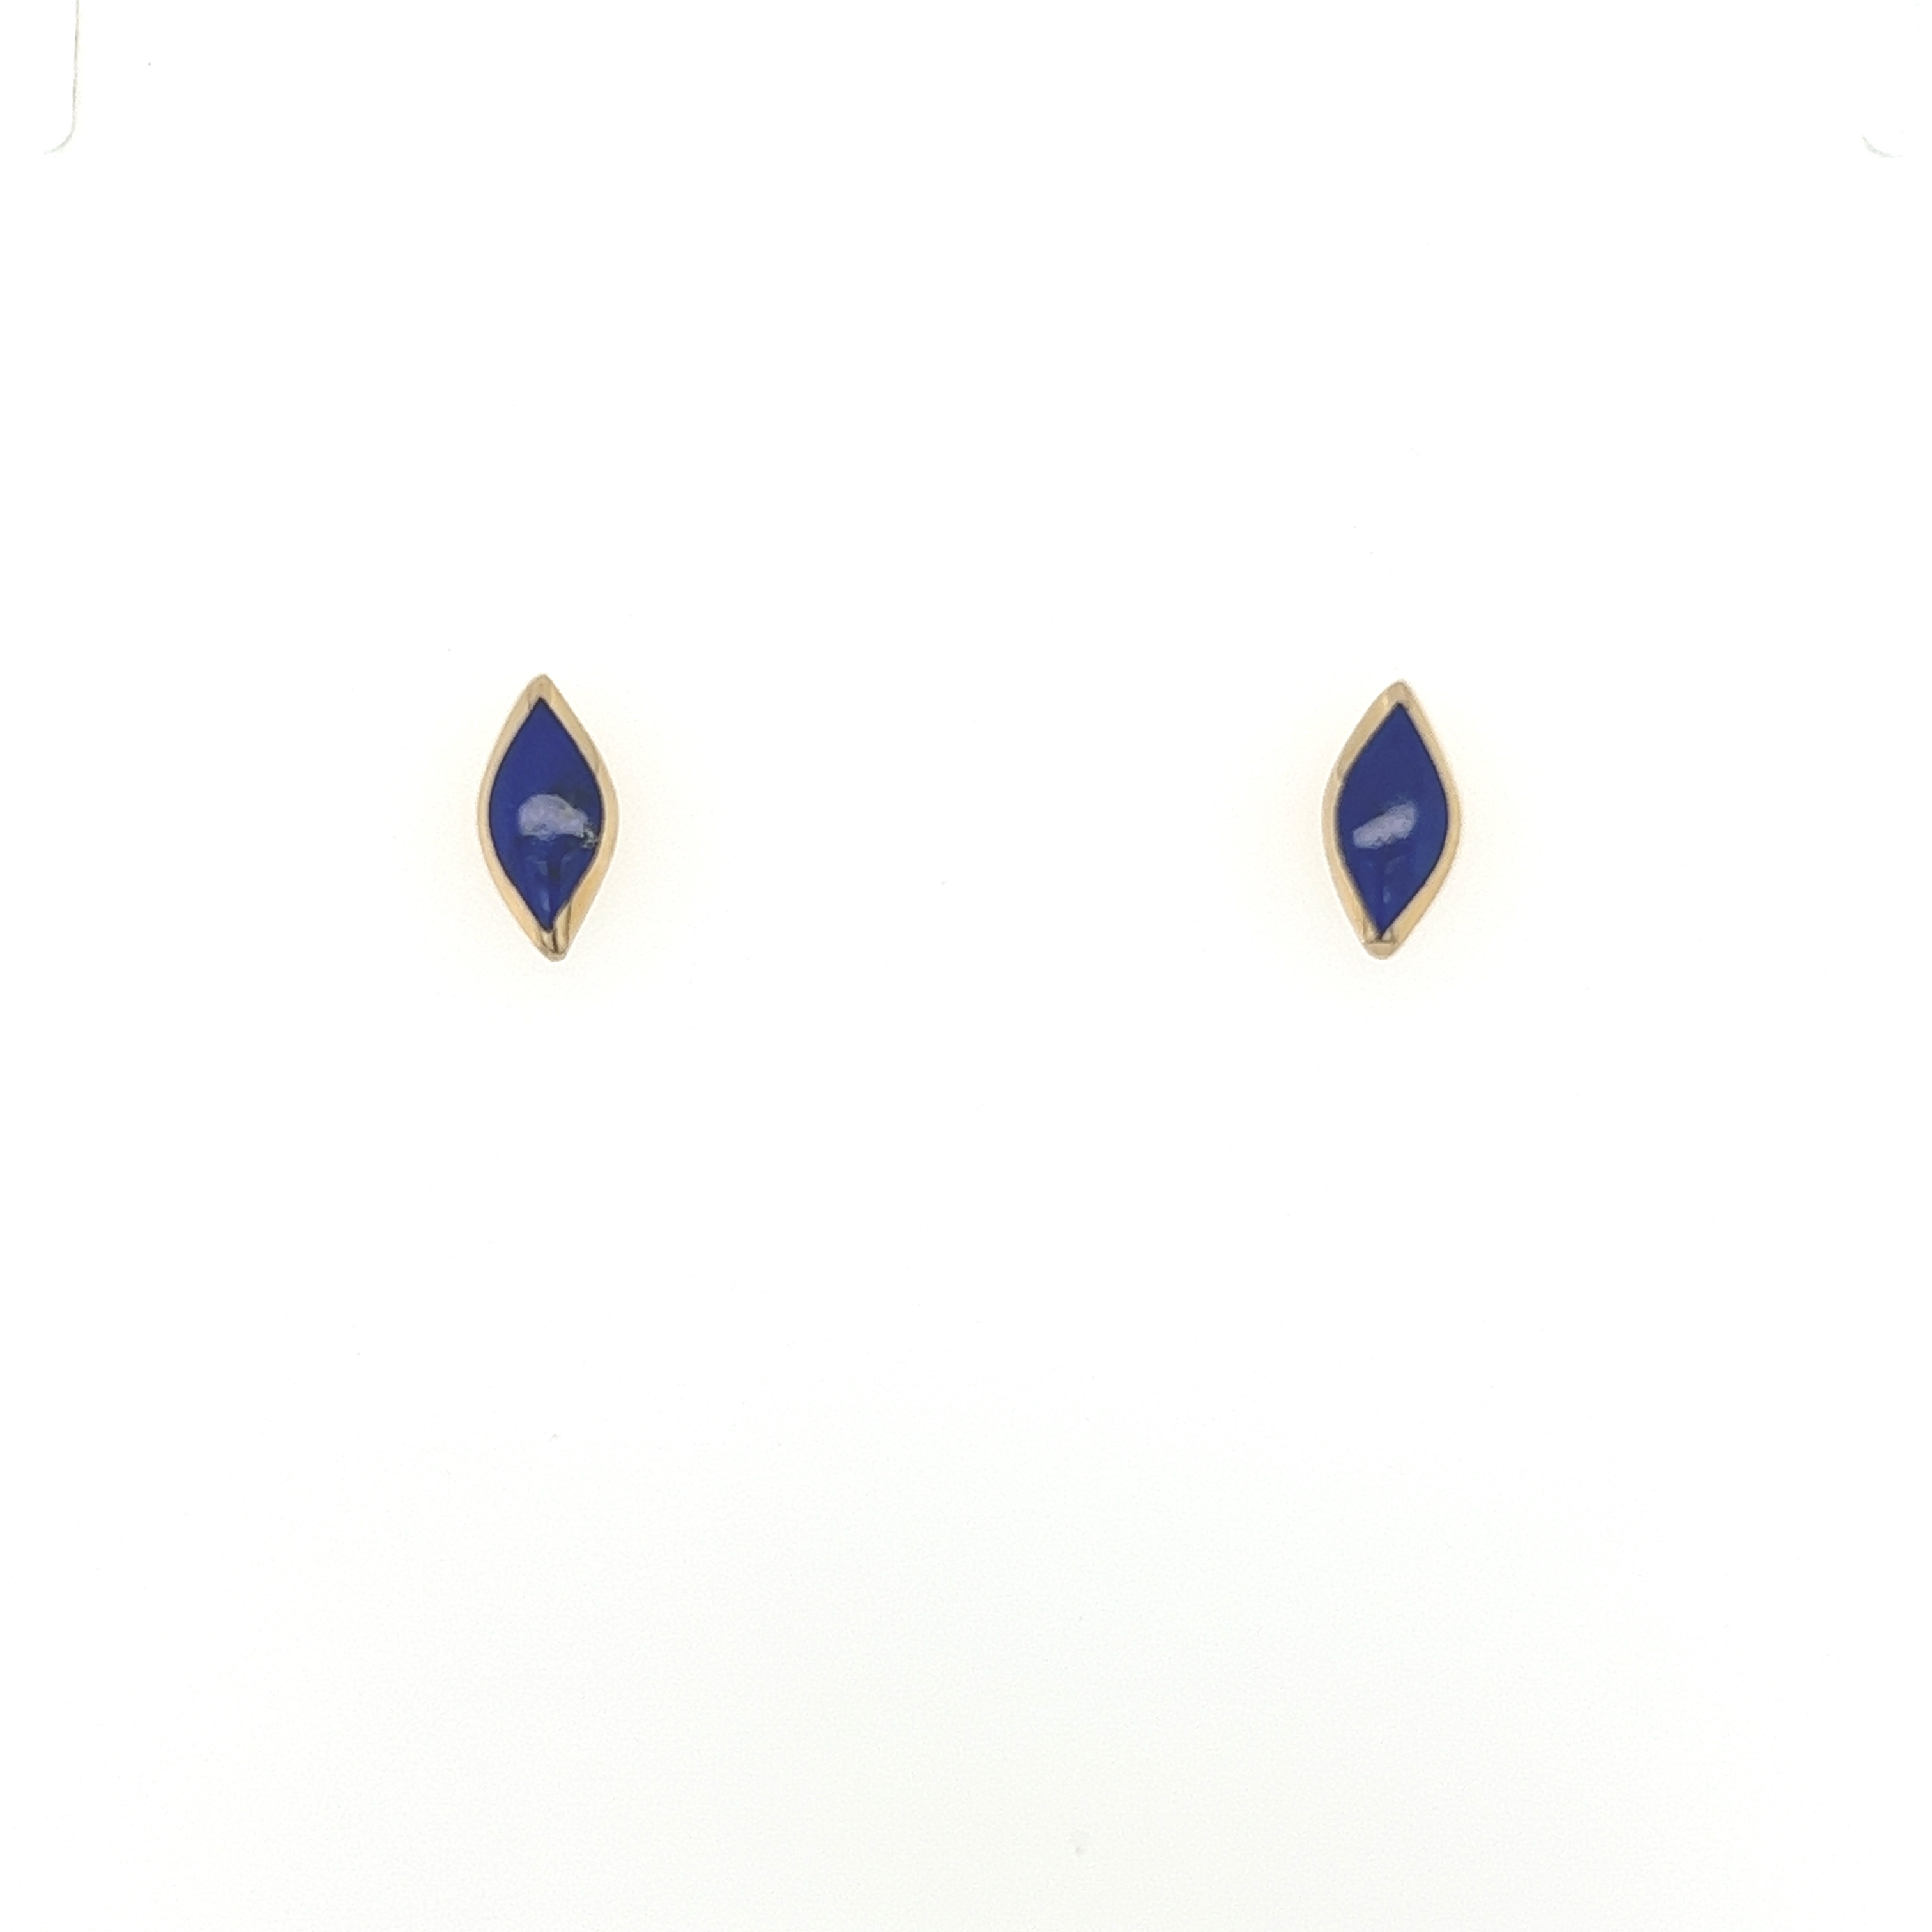 14 Karat yellow gold Stud Earrings with Lapis Lazuli inlay